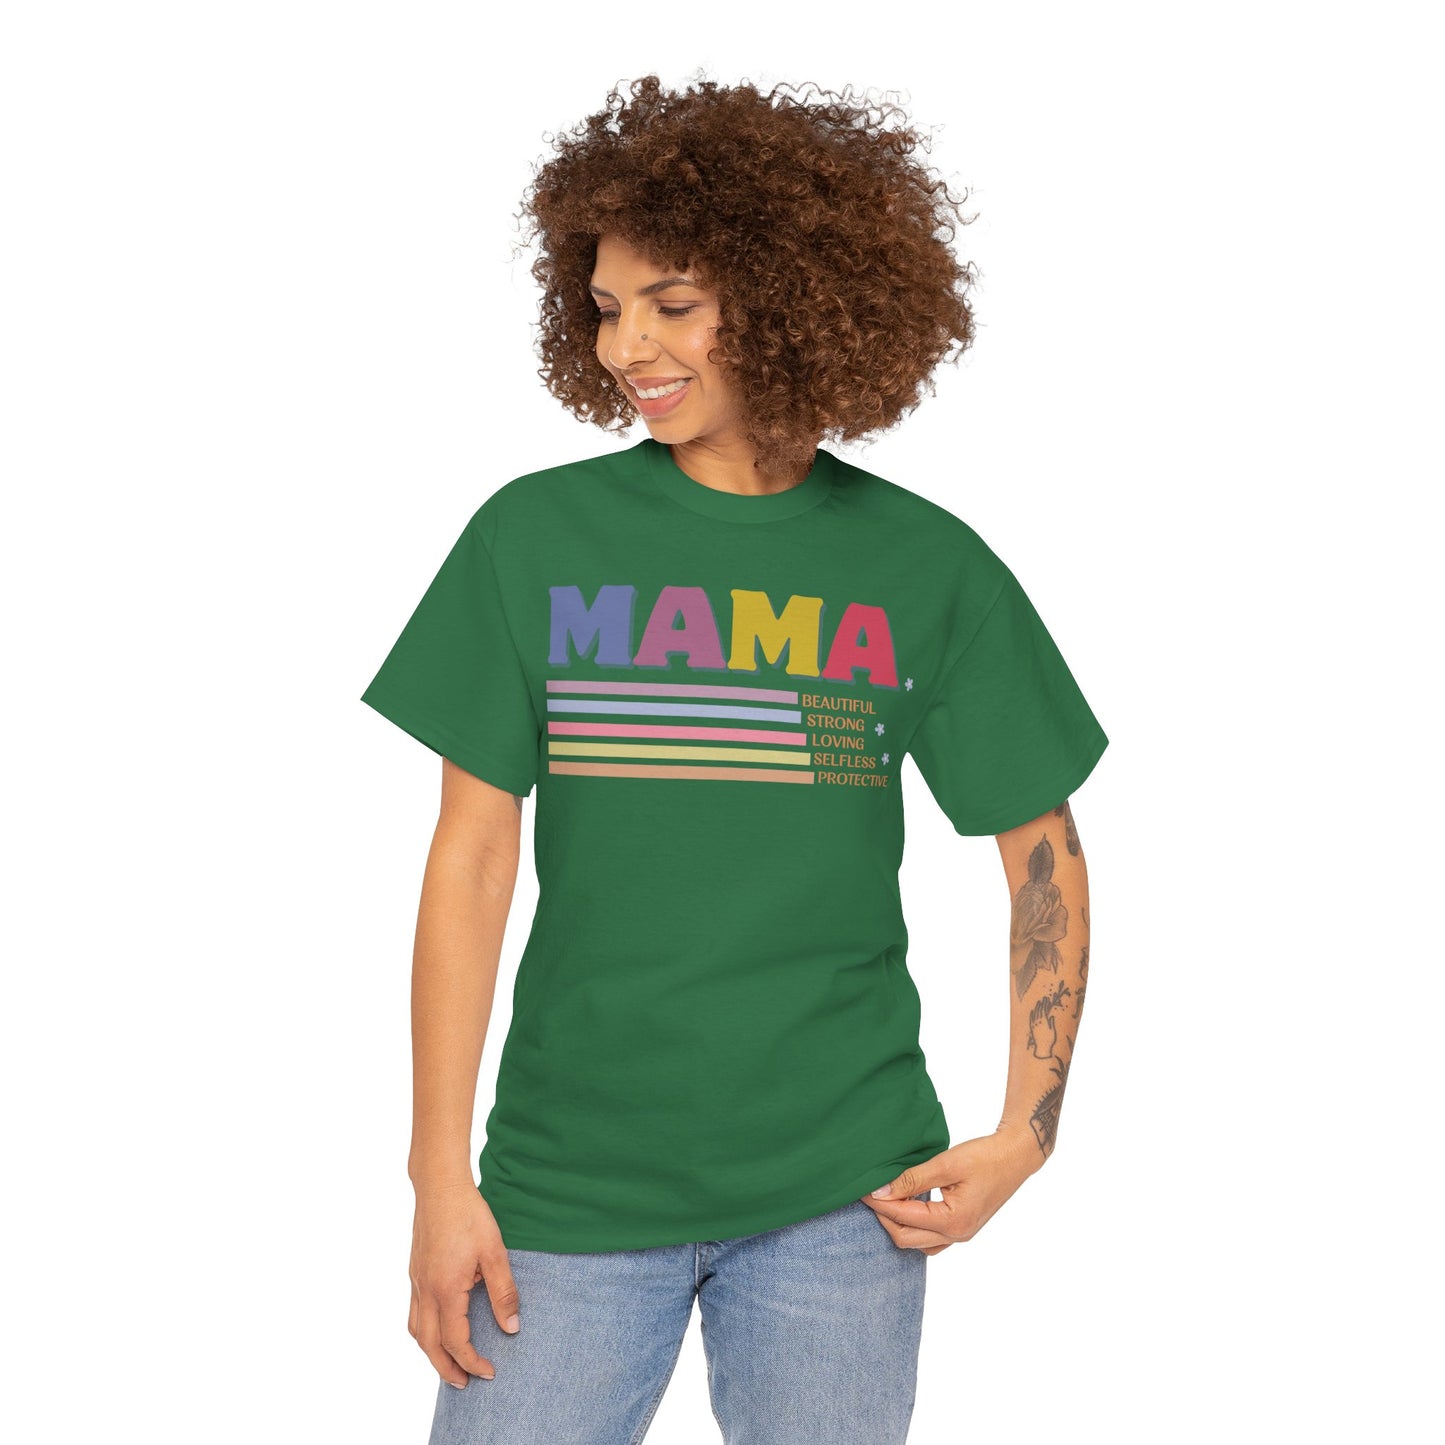 Attributes of Mama T-Shirt. Inspirational Characteristics of Mama.